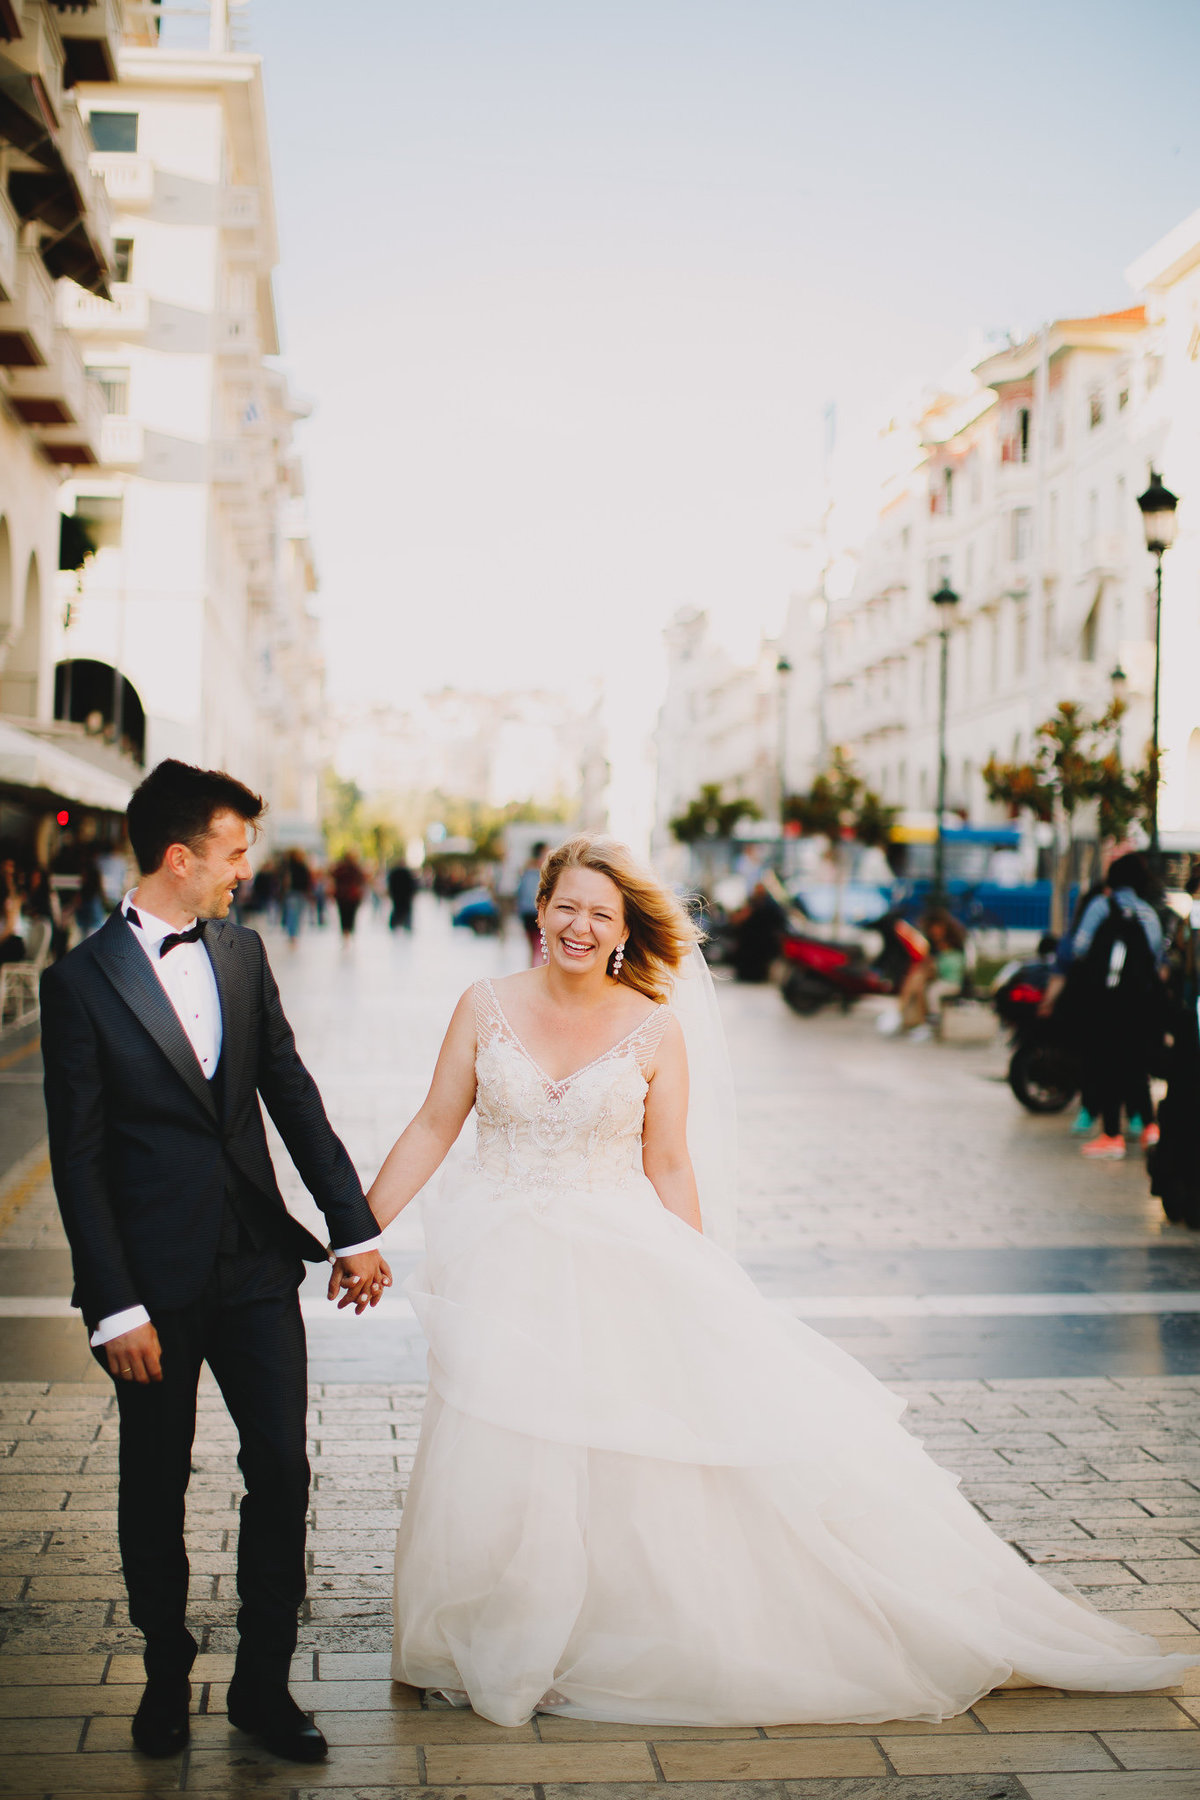 Archer Inspired Photography Thessaloniki Greece Wedding Portraits - International SoCal California Long Beach Photographer-15